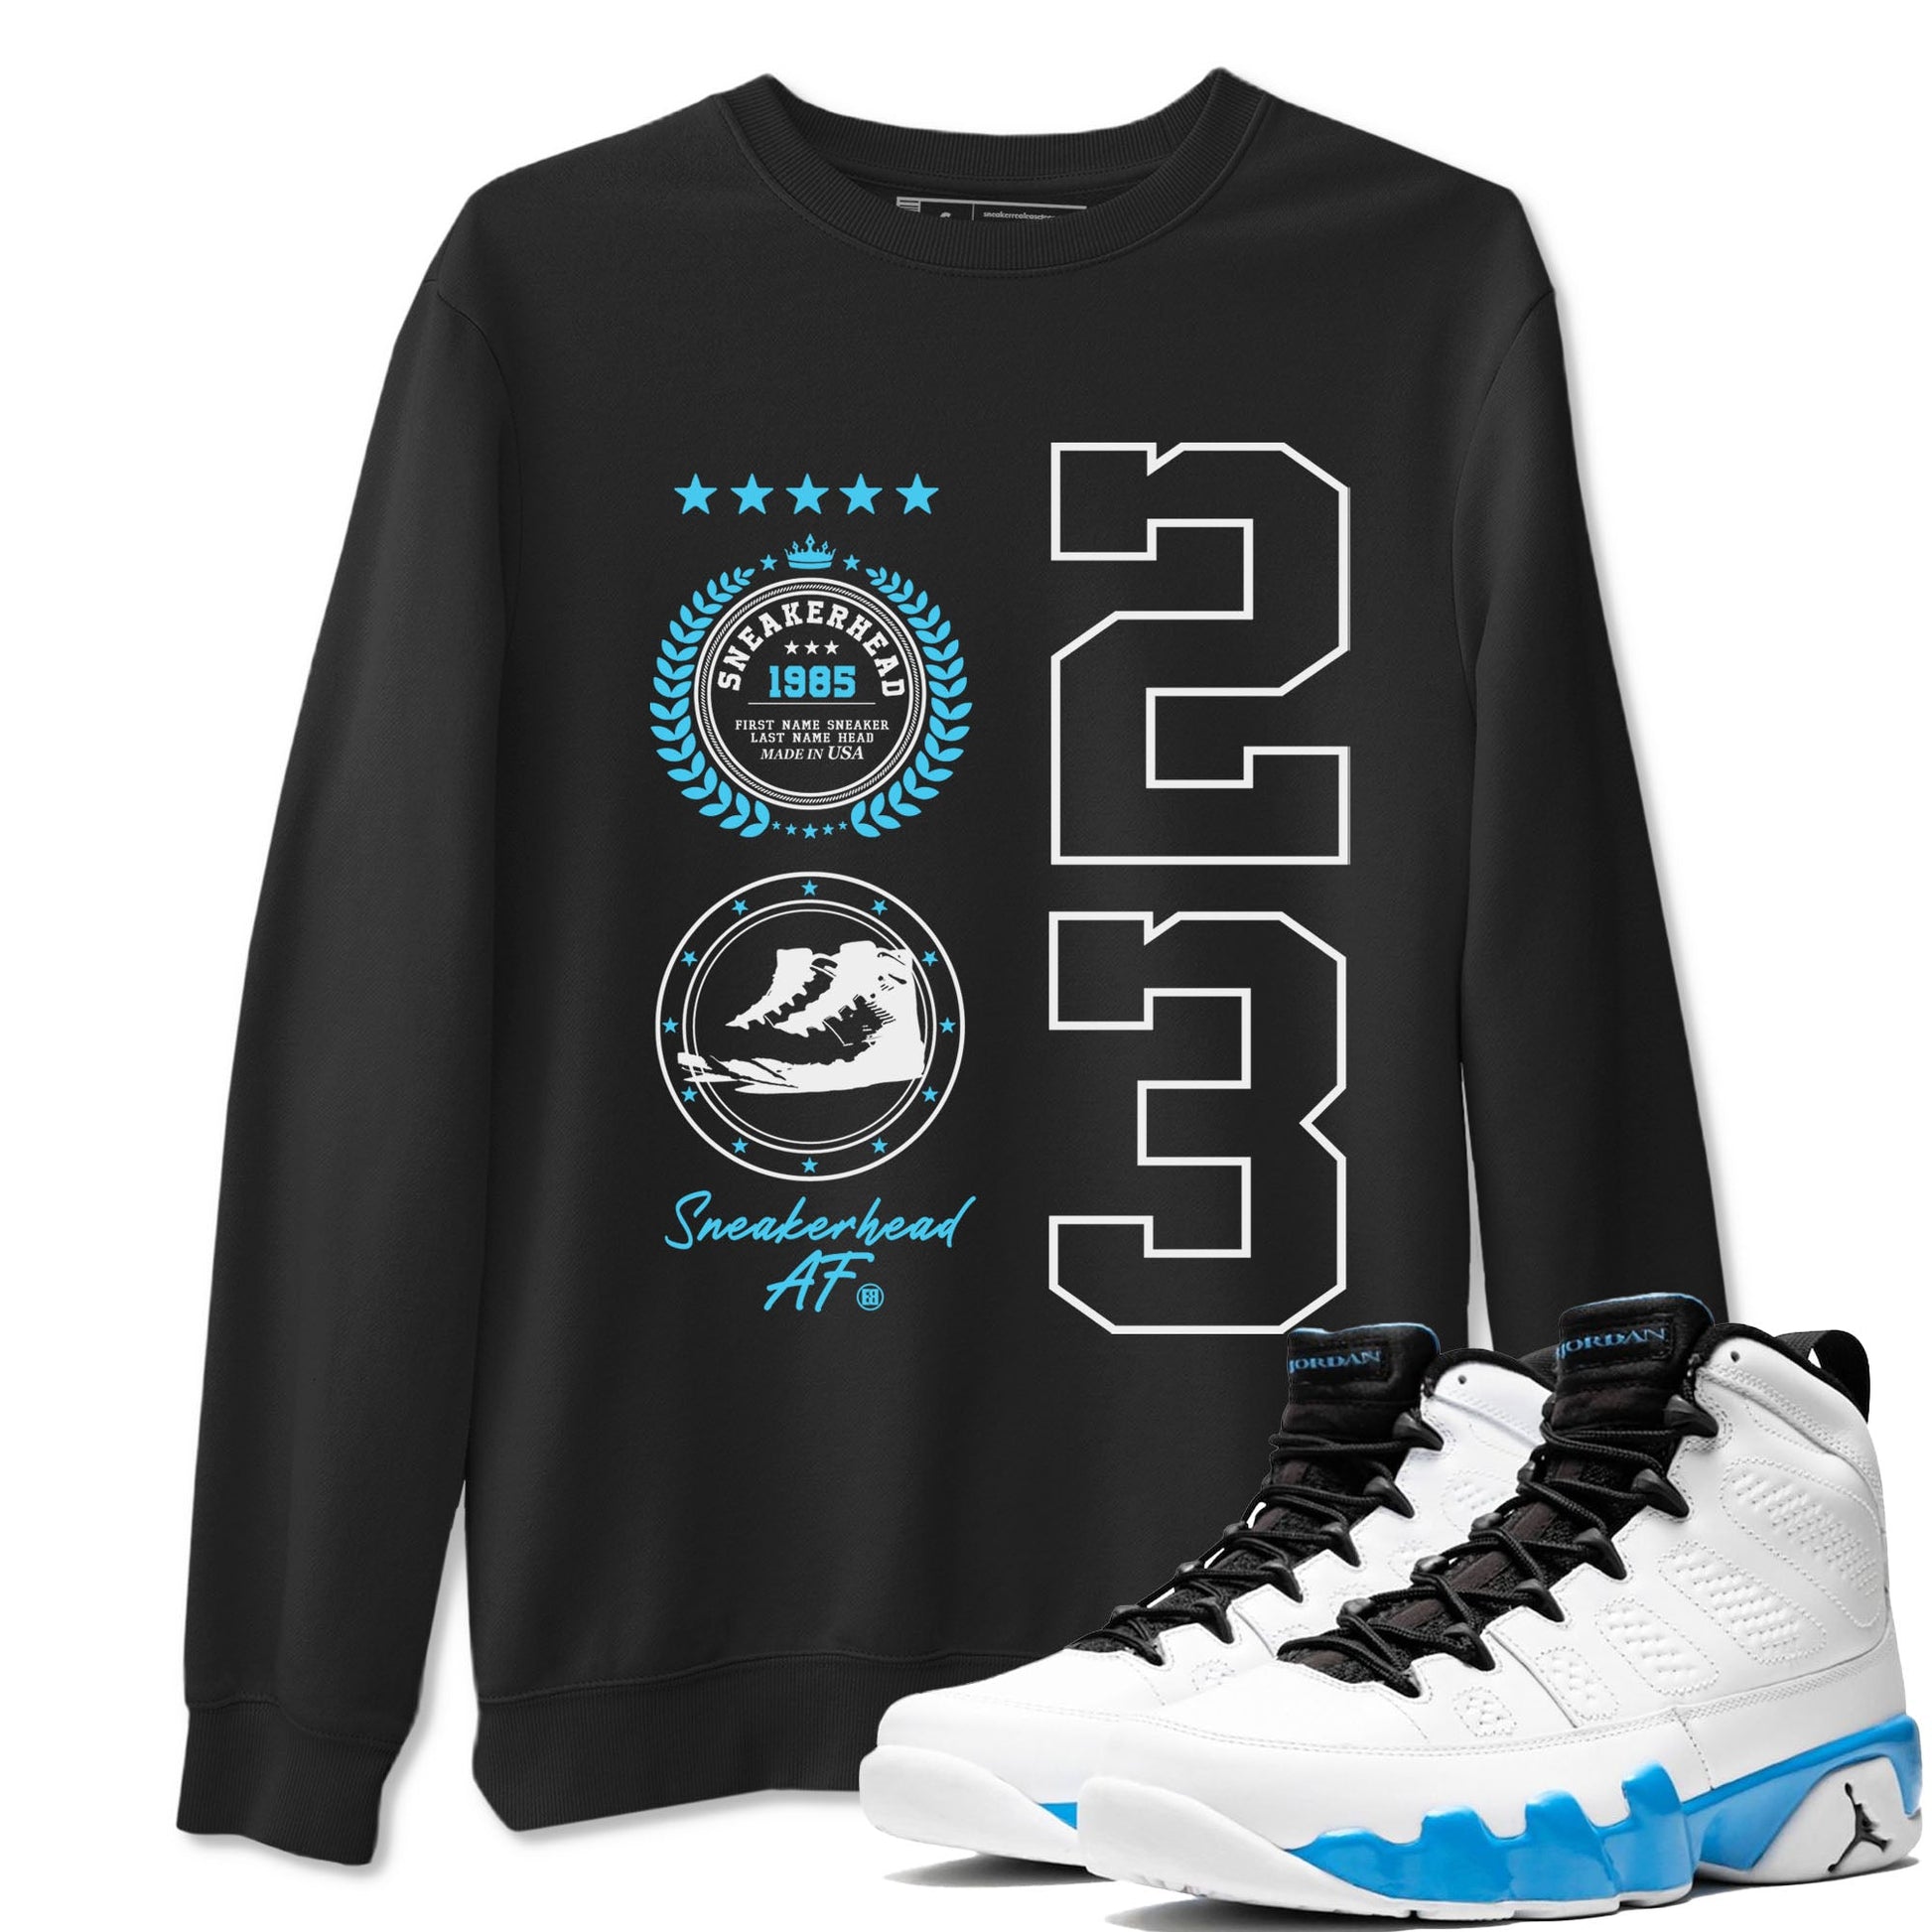 9s Powder Blue shirt to match jordans Sneaker Emblem sneaker tees Air Jordan 9 Powder Blue SNRT Sneaker Release Tees unisex cotton Black 1 crew neck shirt